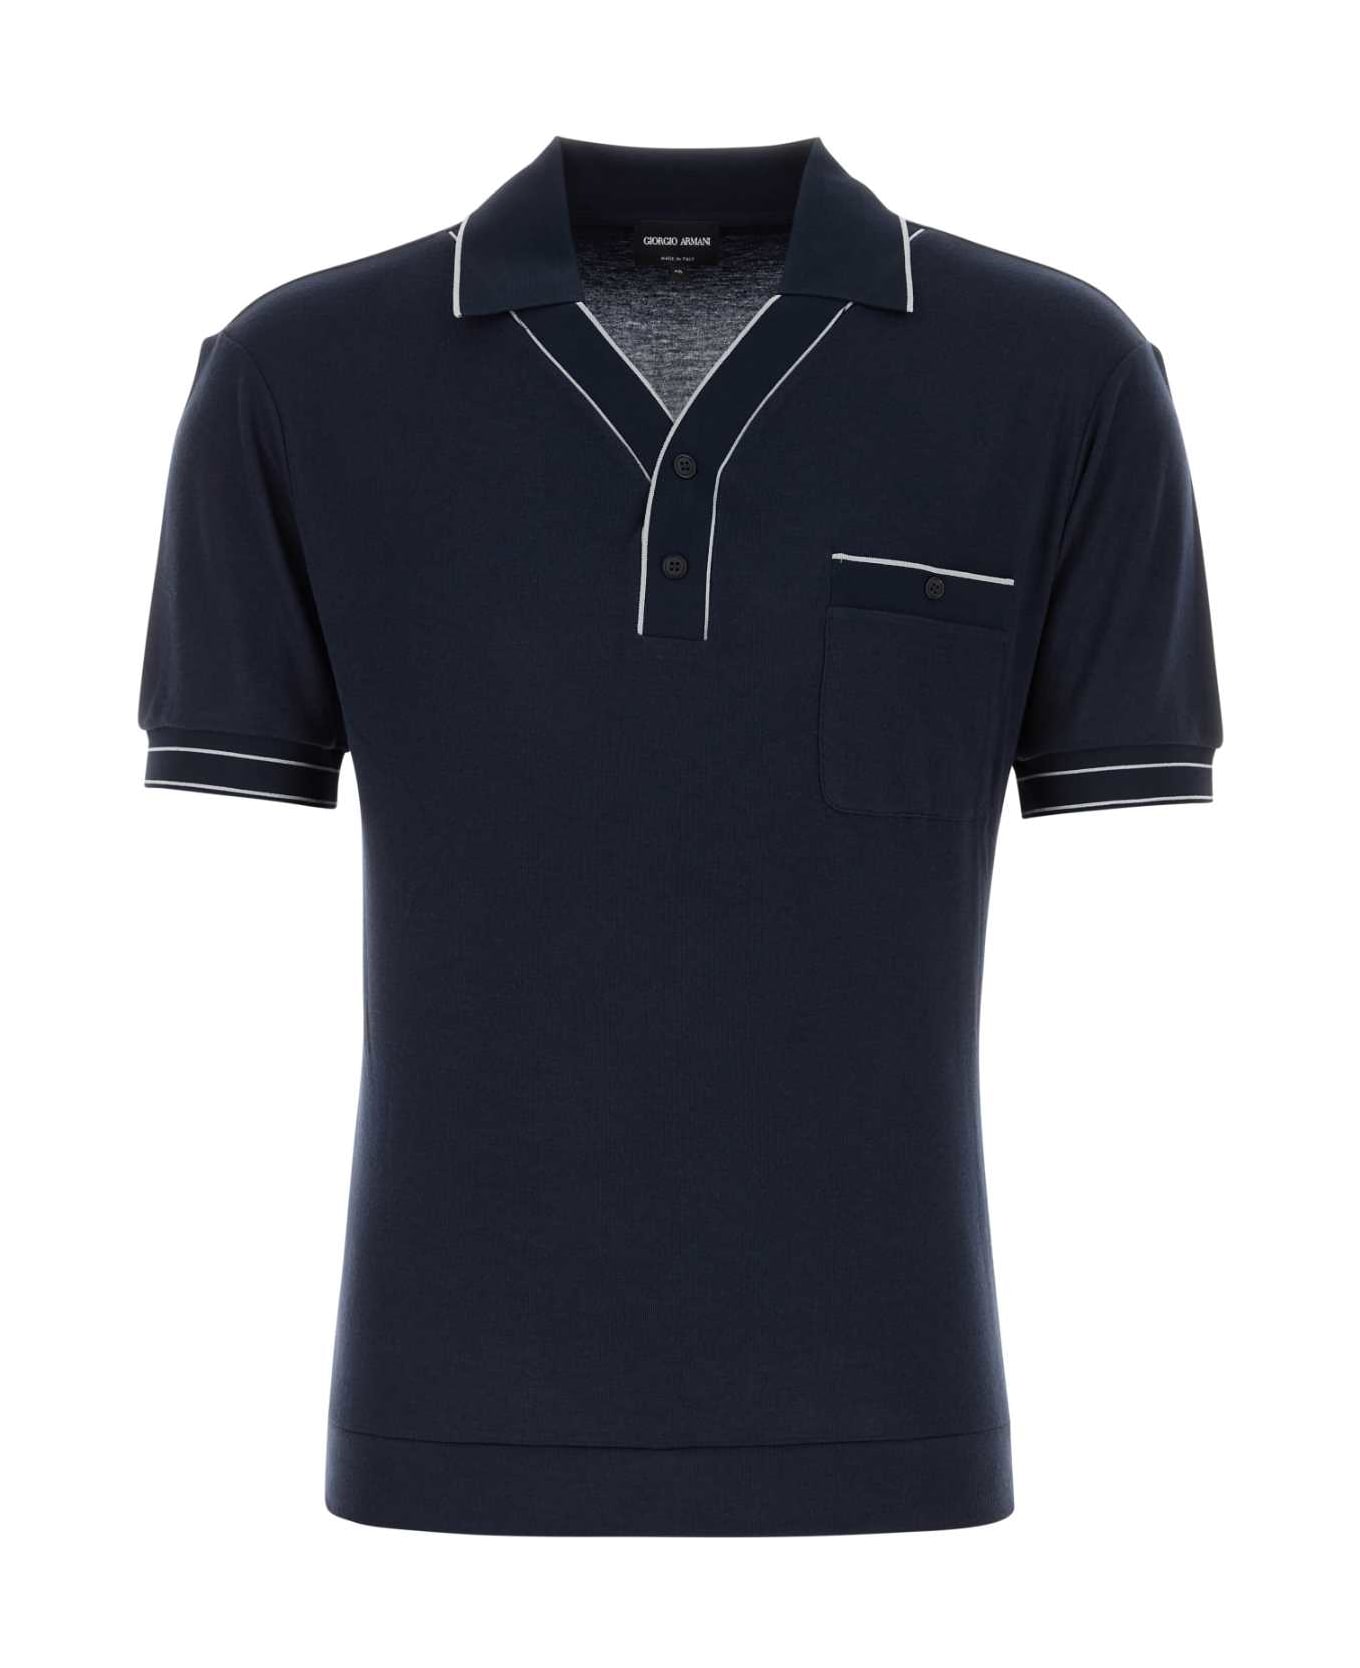 Giorgio Armani Midnight Bue Viscose Blend Polo Shirt - NAVY